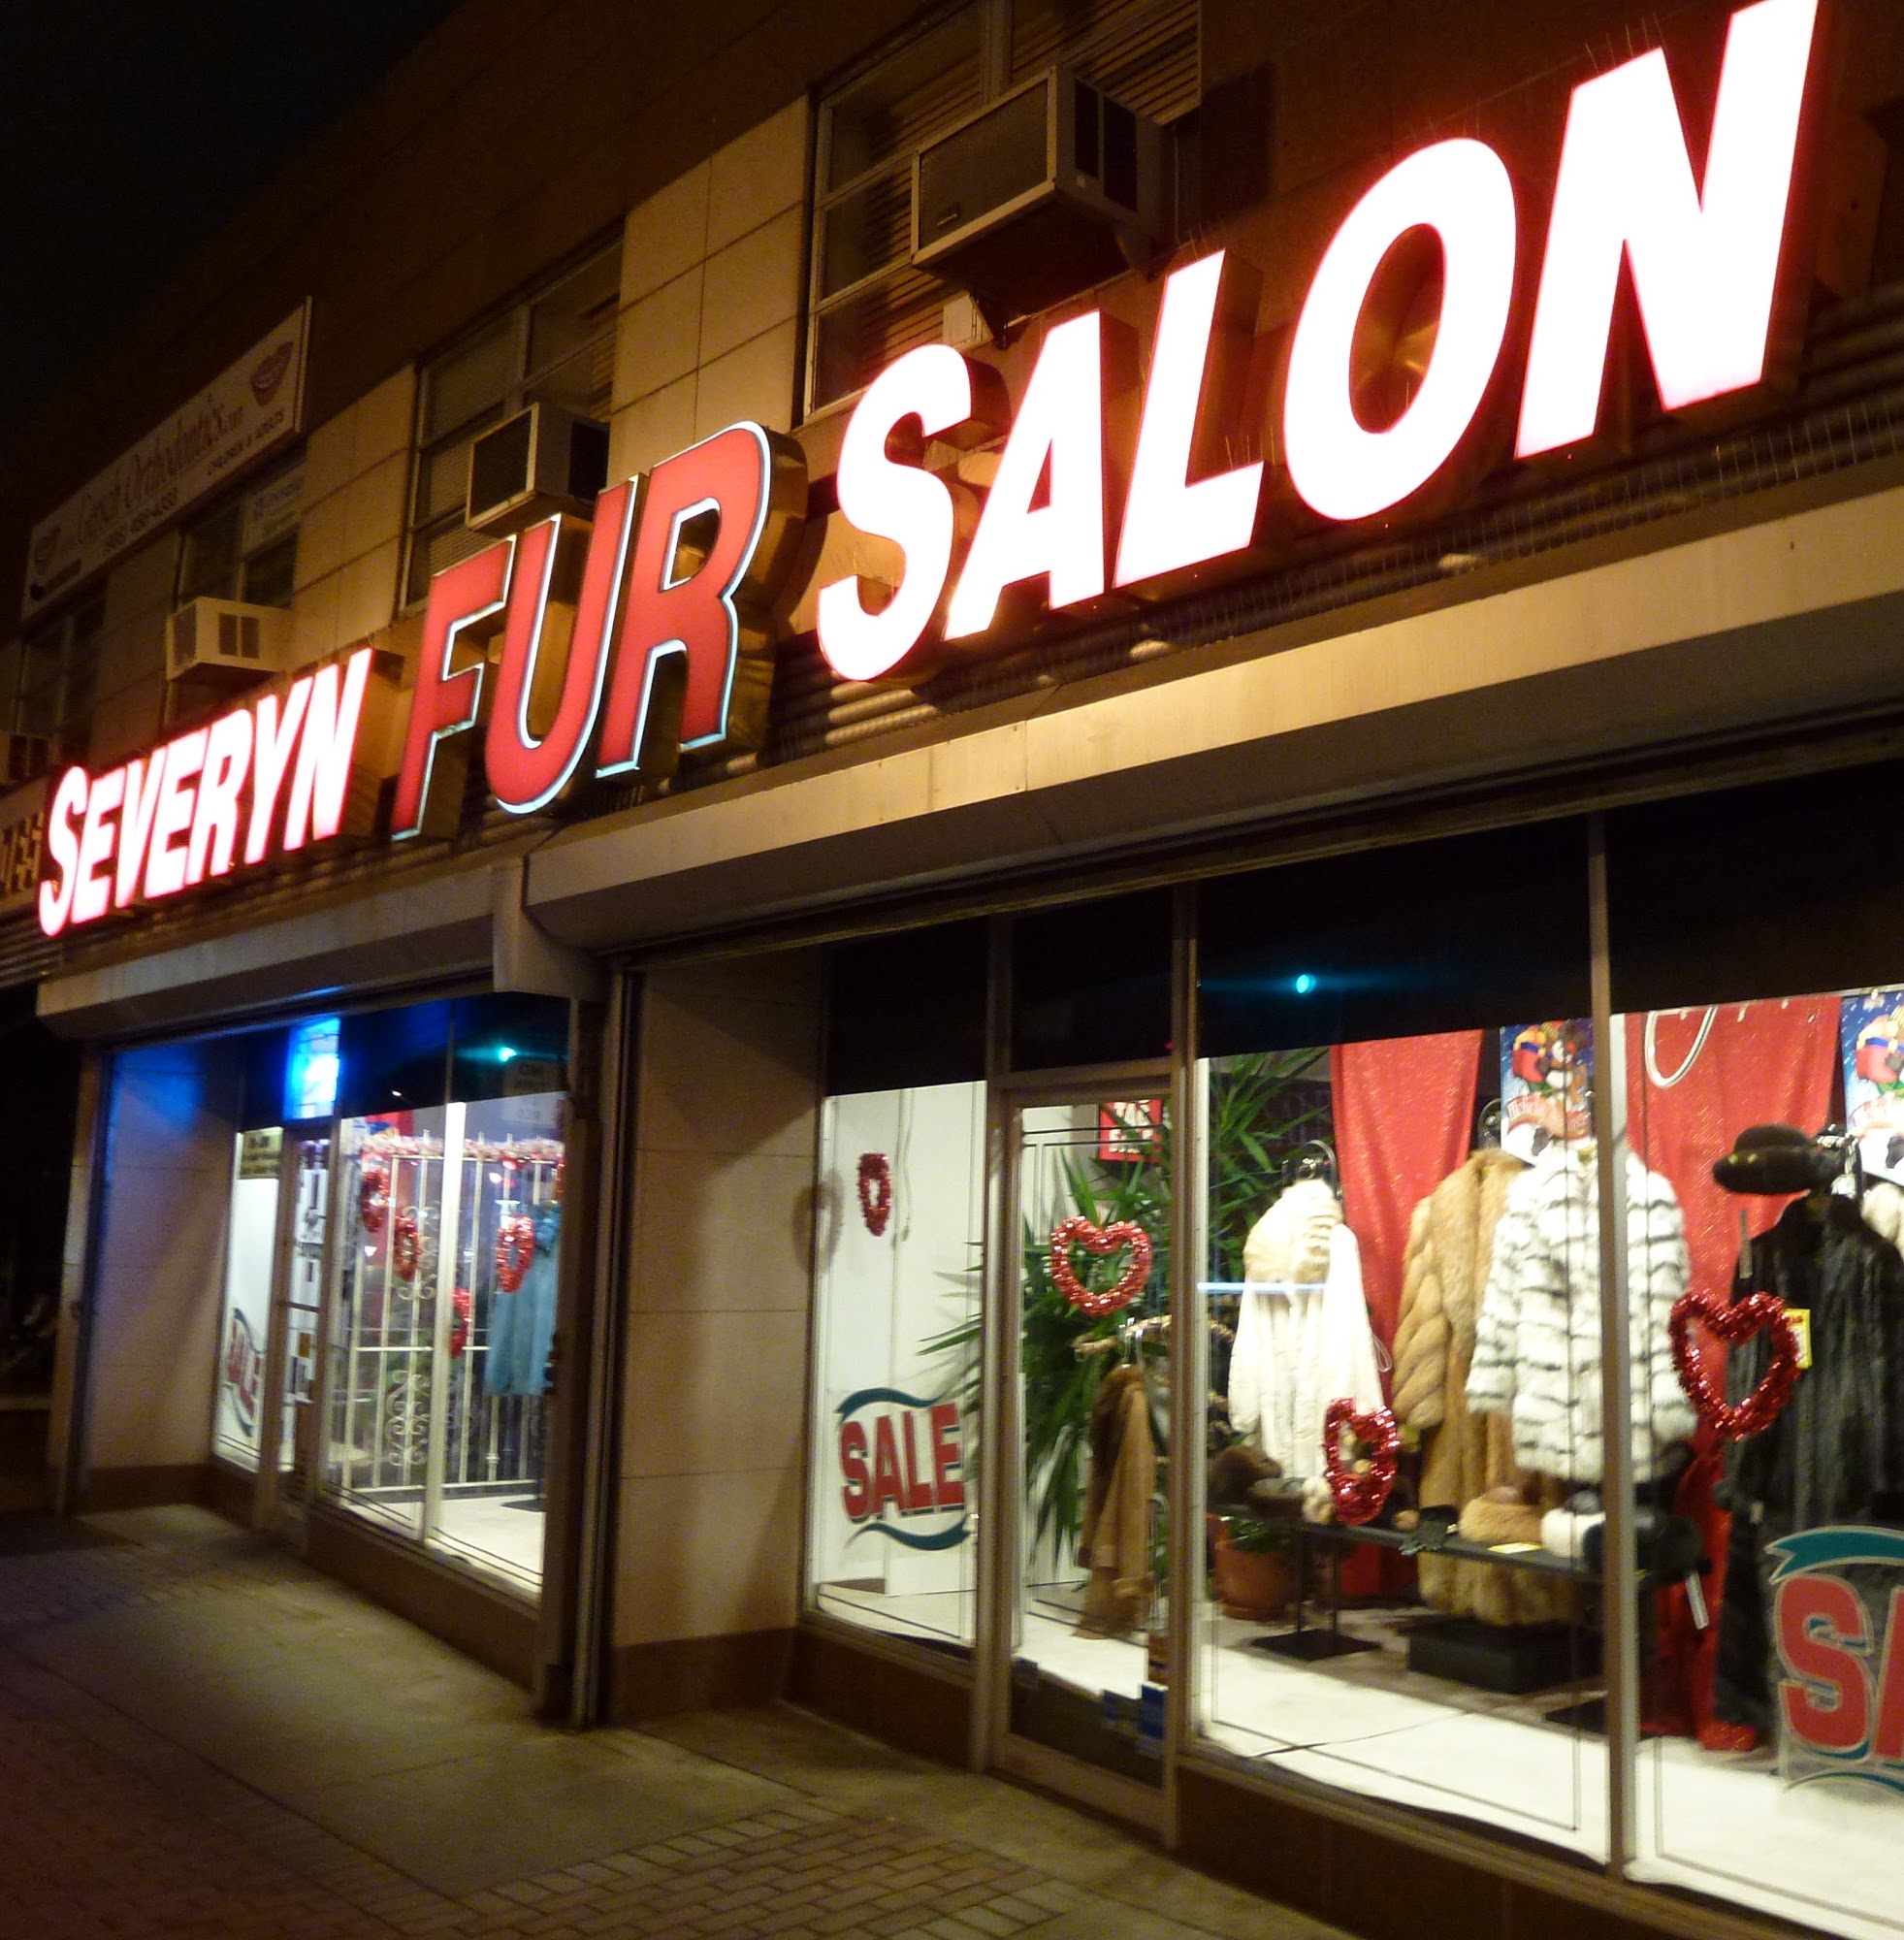 Severyn Furs Salon ......Fur Sale.....Storage Since1951